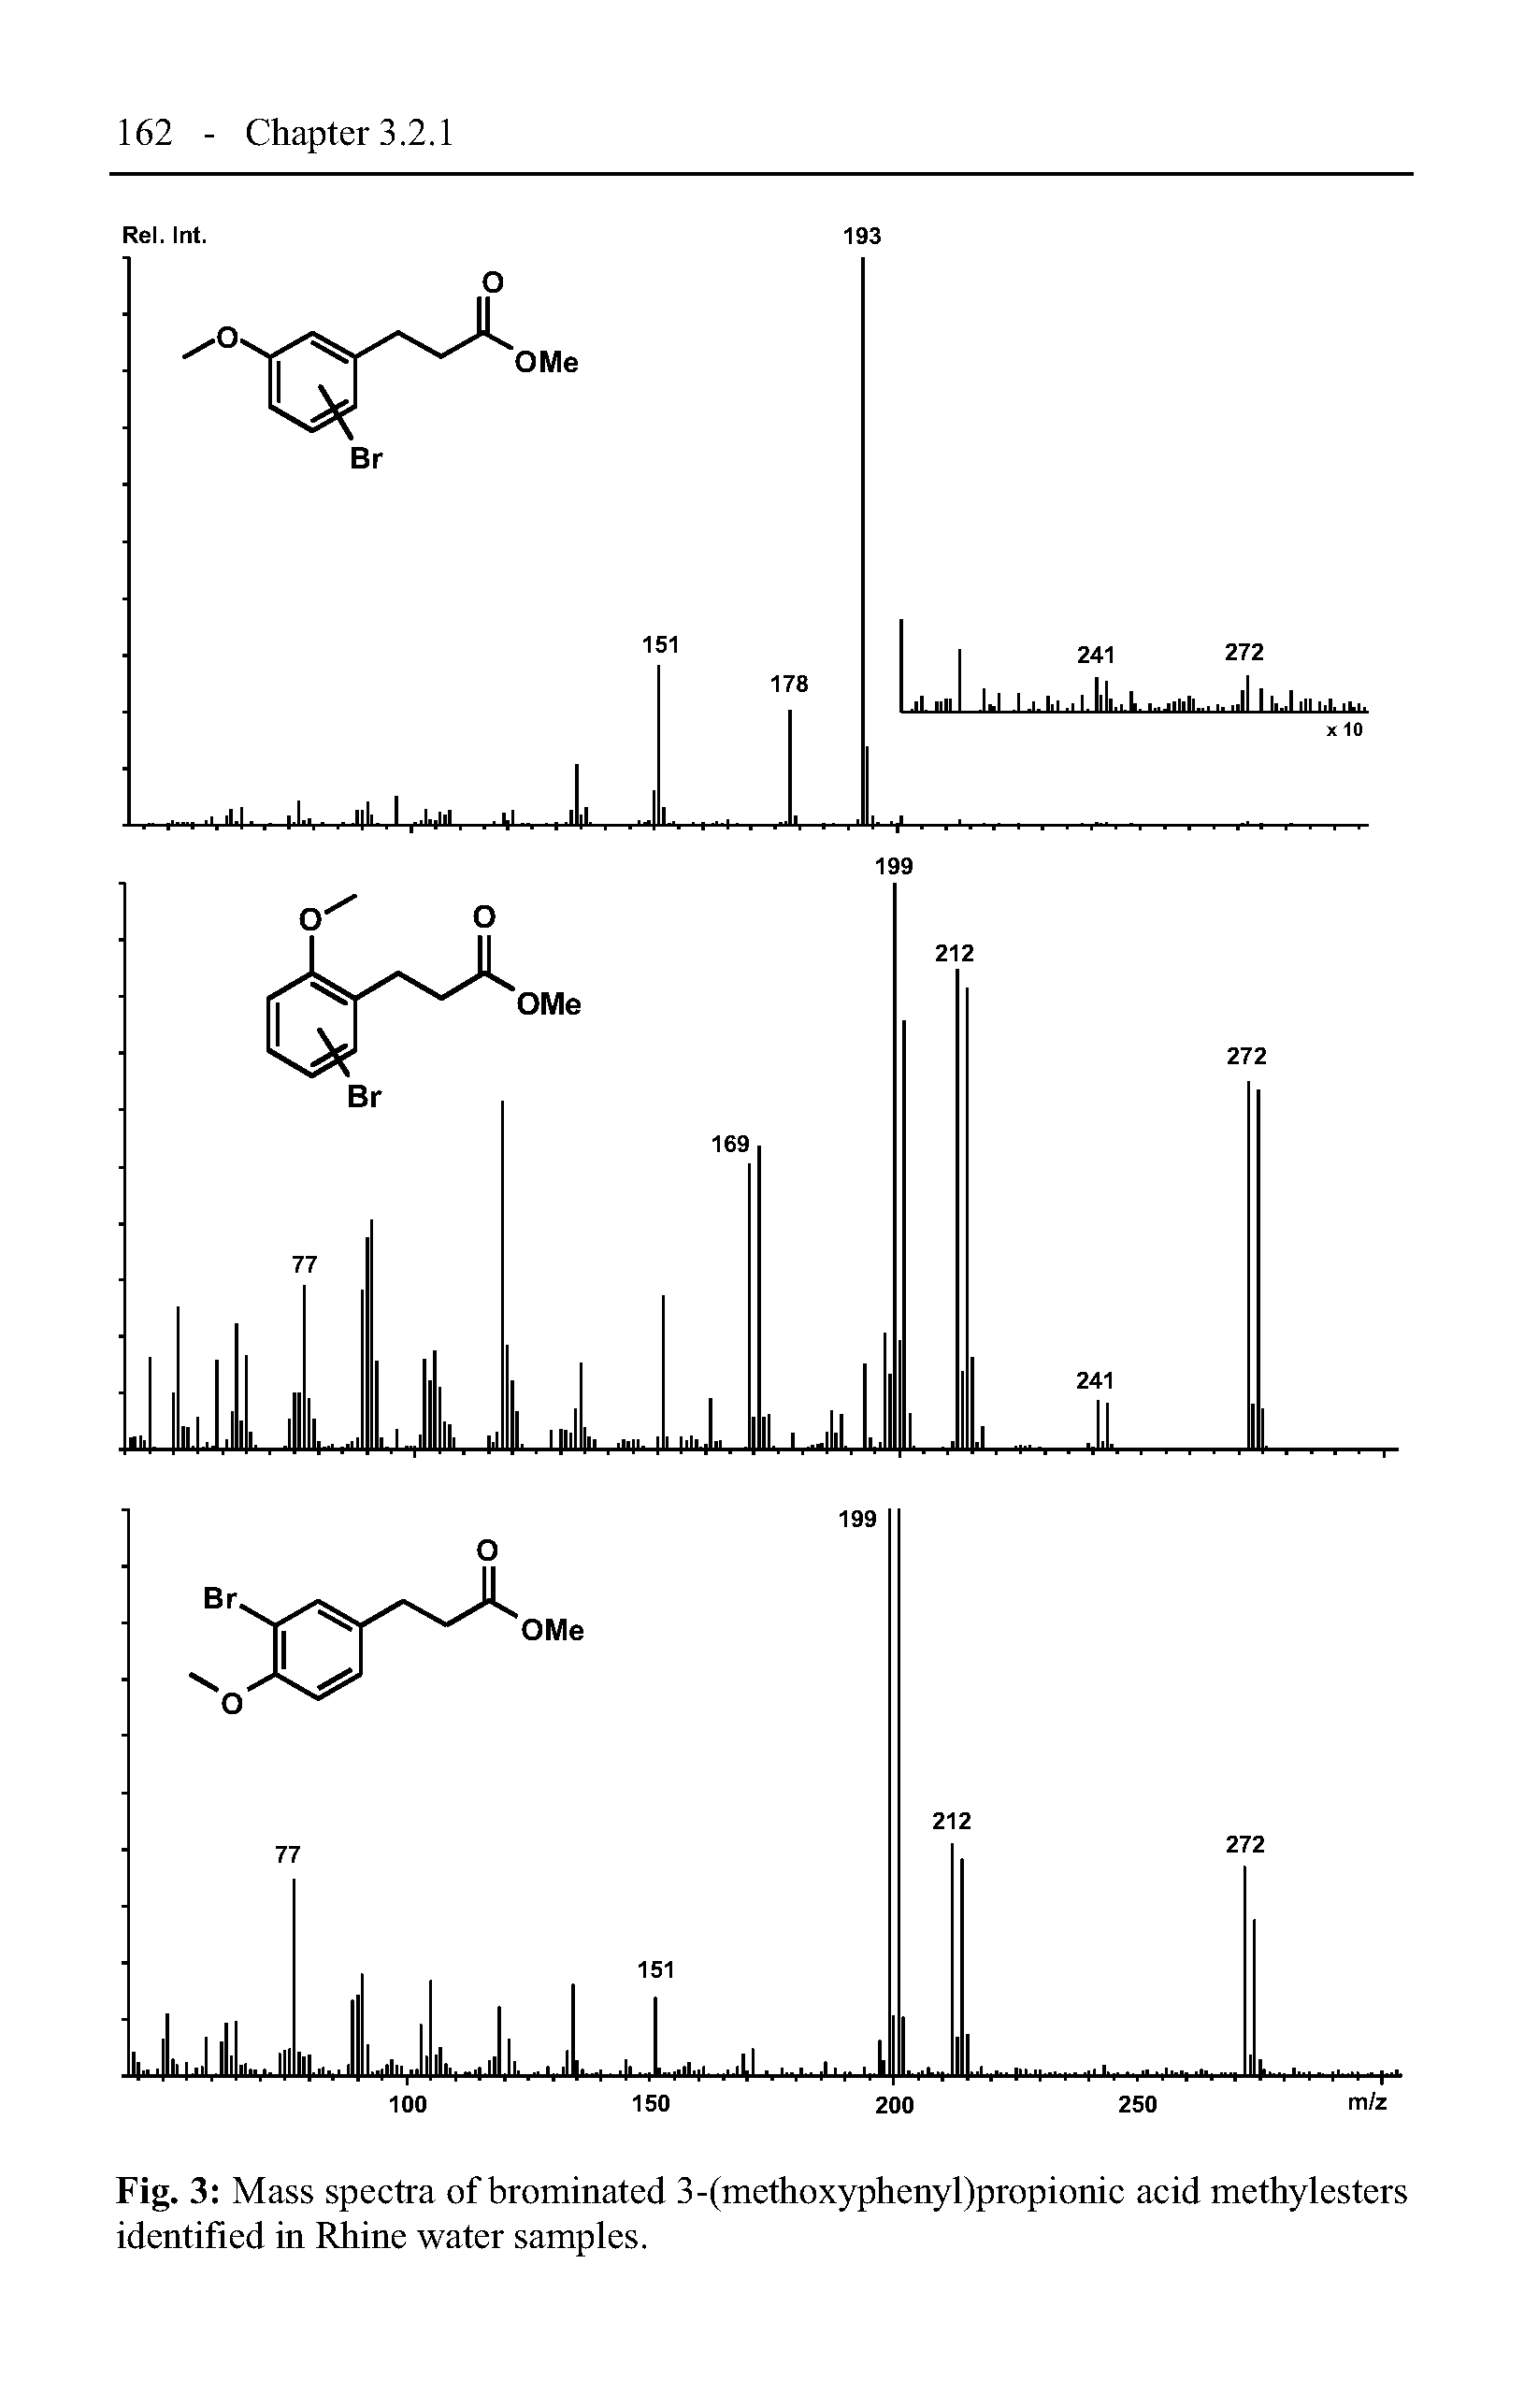 Fig. 3 Mass spectra of brominated 3-(methoxyphenyl)propionic acid methylesters identified in Rhine water samples.